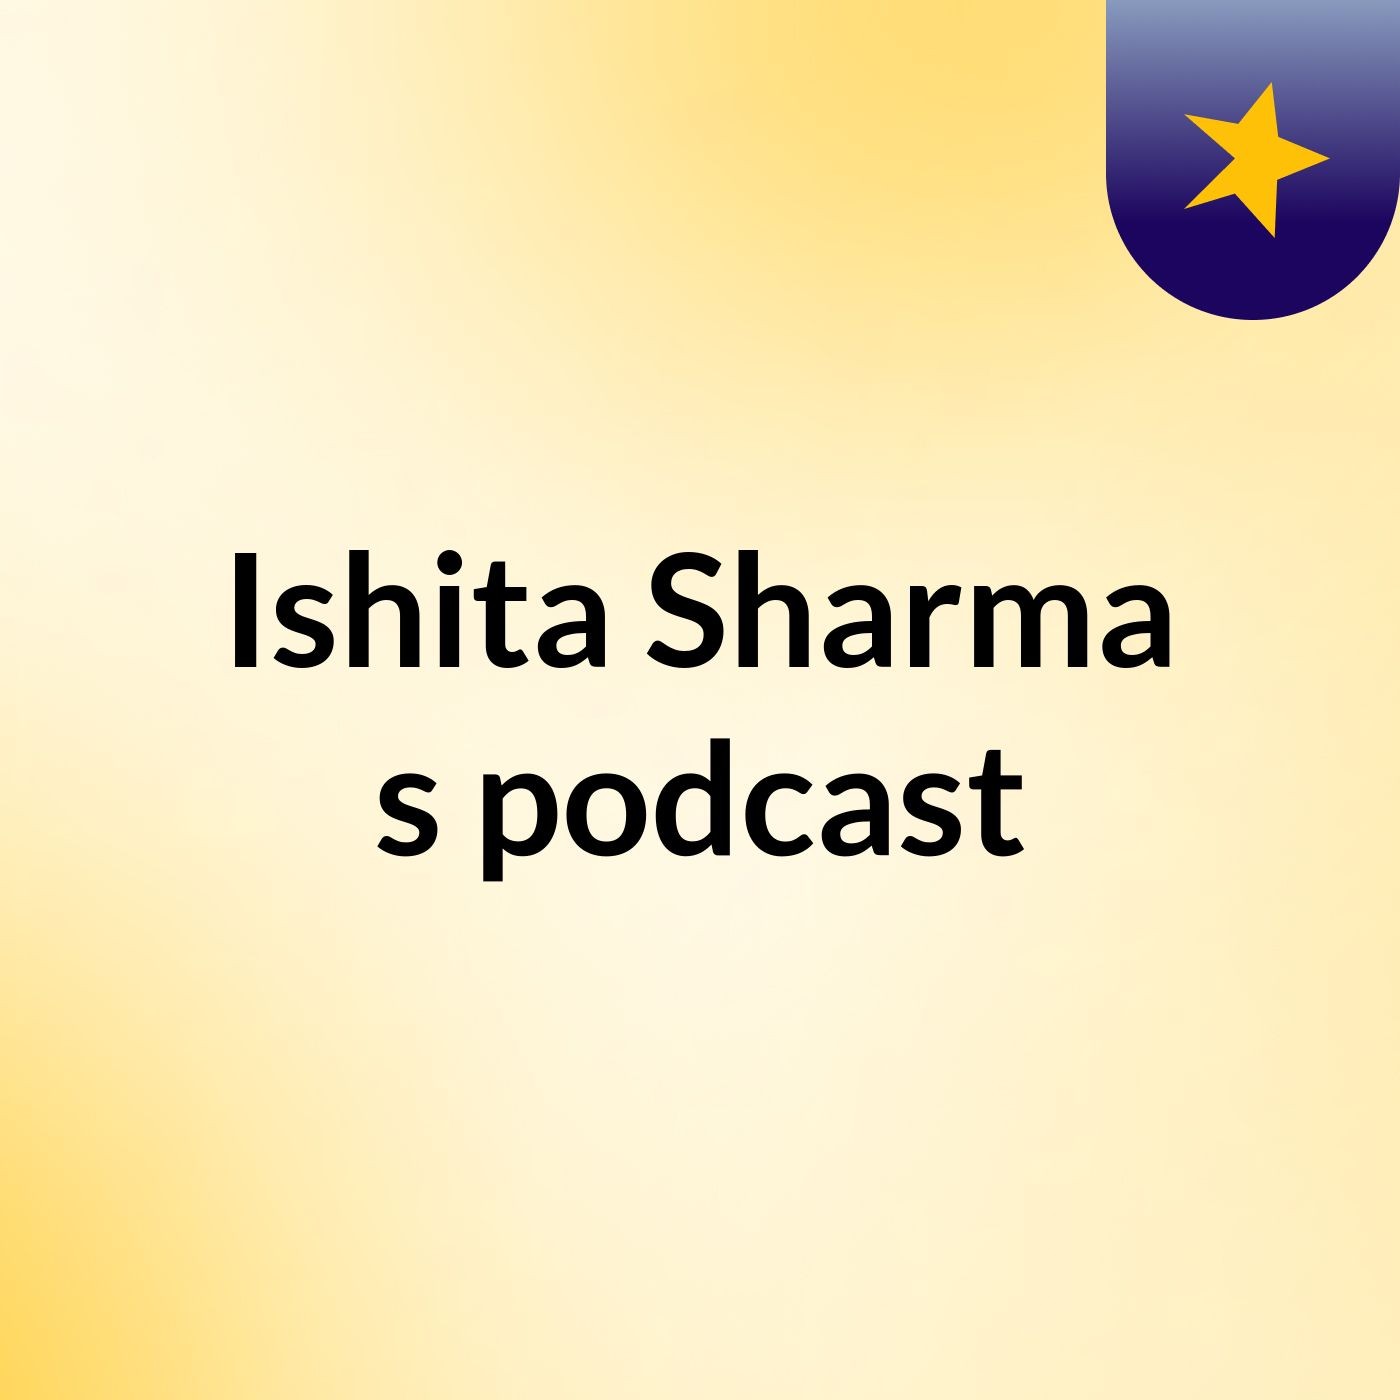 Episode 2 - Ishita Sharma's podcast